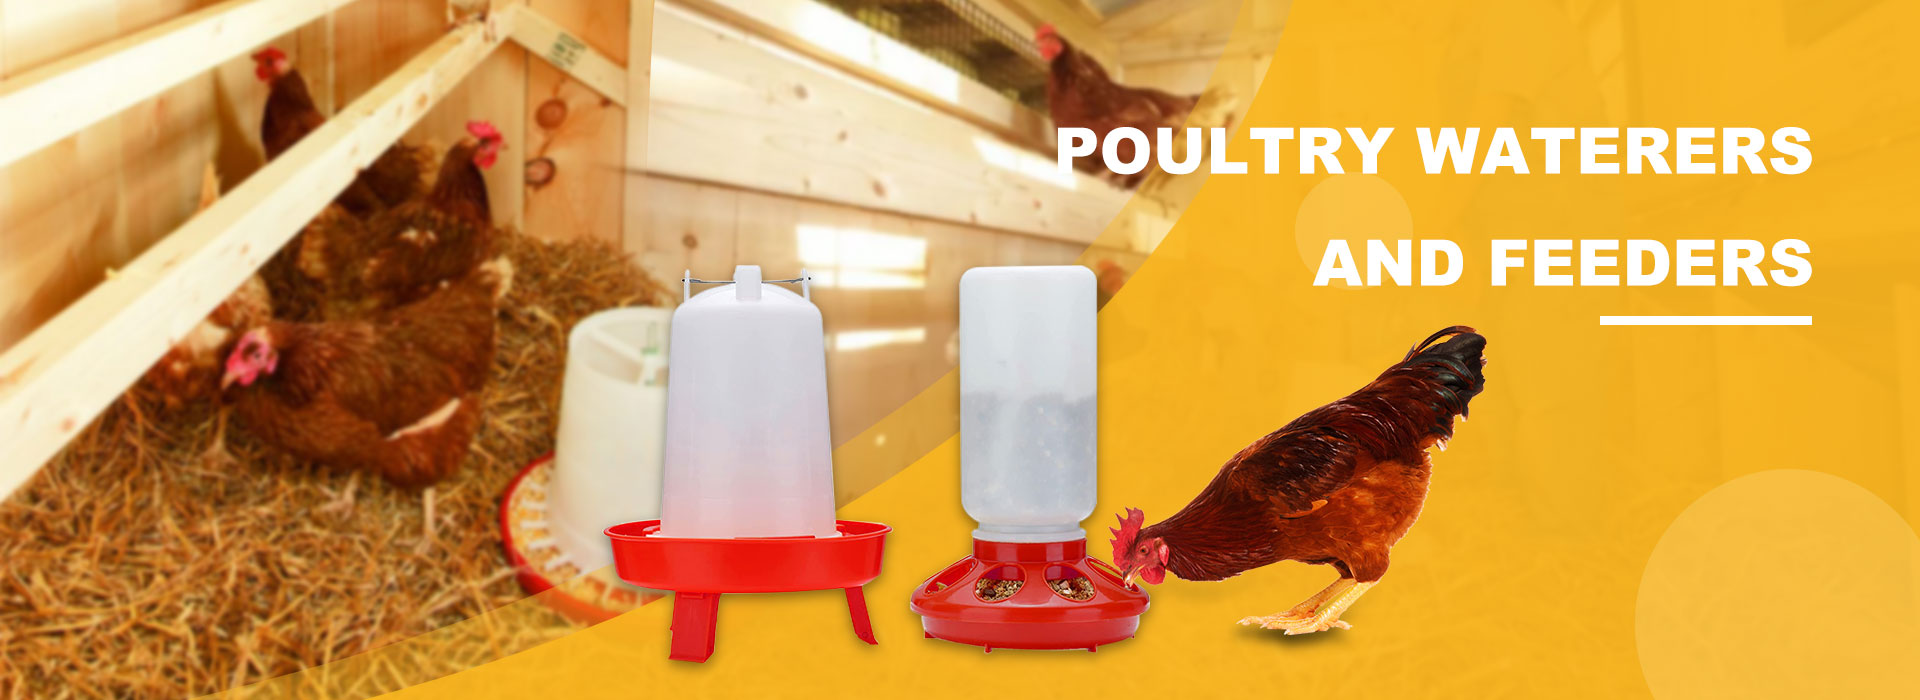 Kilang Penyiram dan Pemakan Ayam China